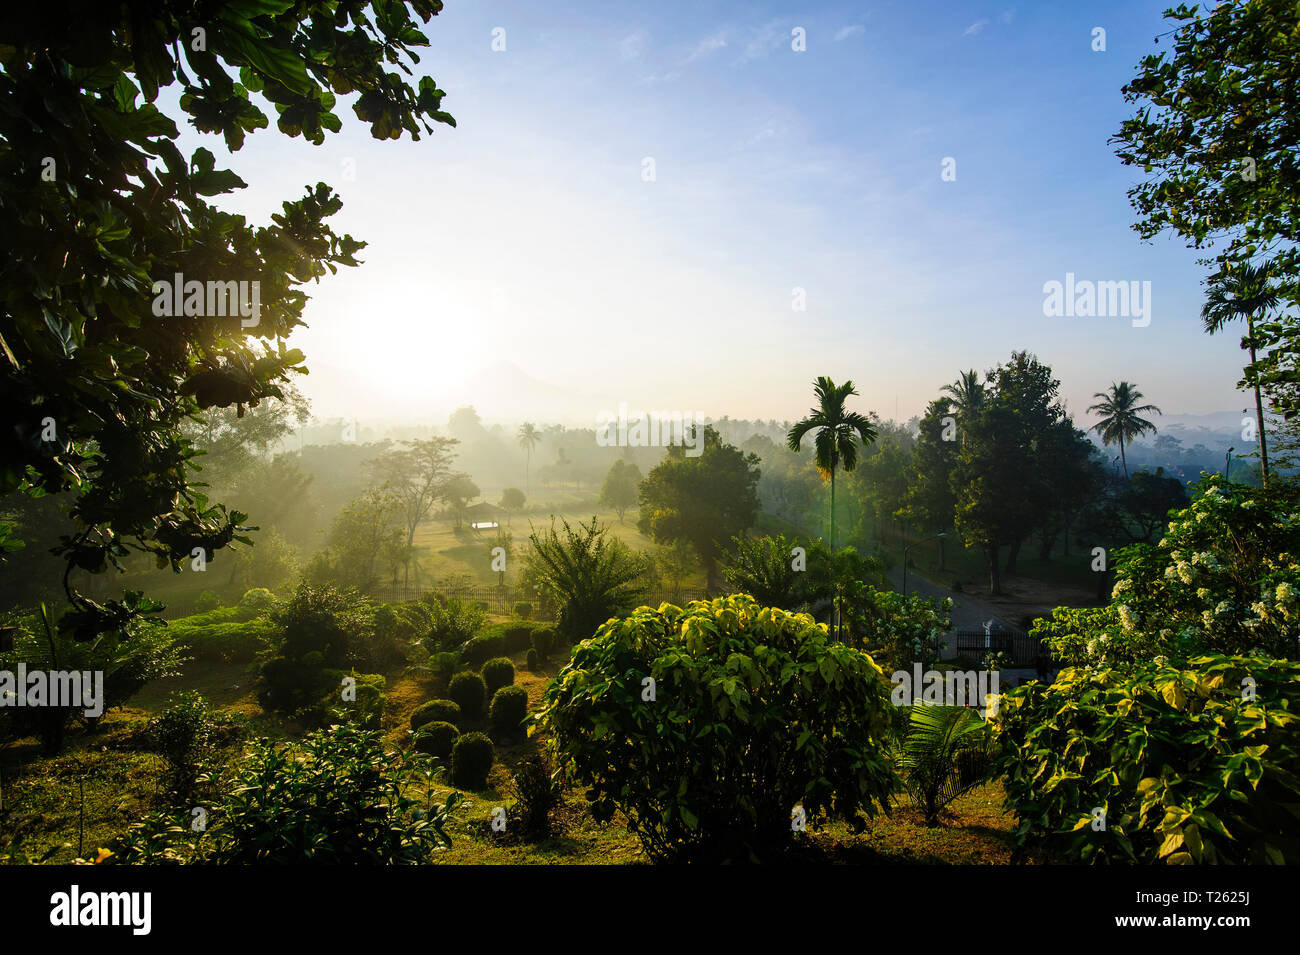 Indonesien, Java, früh am Morgen Blick aus dem Borobudur Tempel Komplex auf die Landschaft um Stockfoto